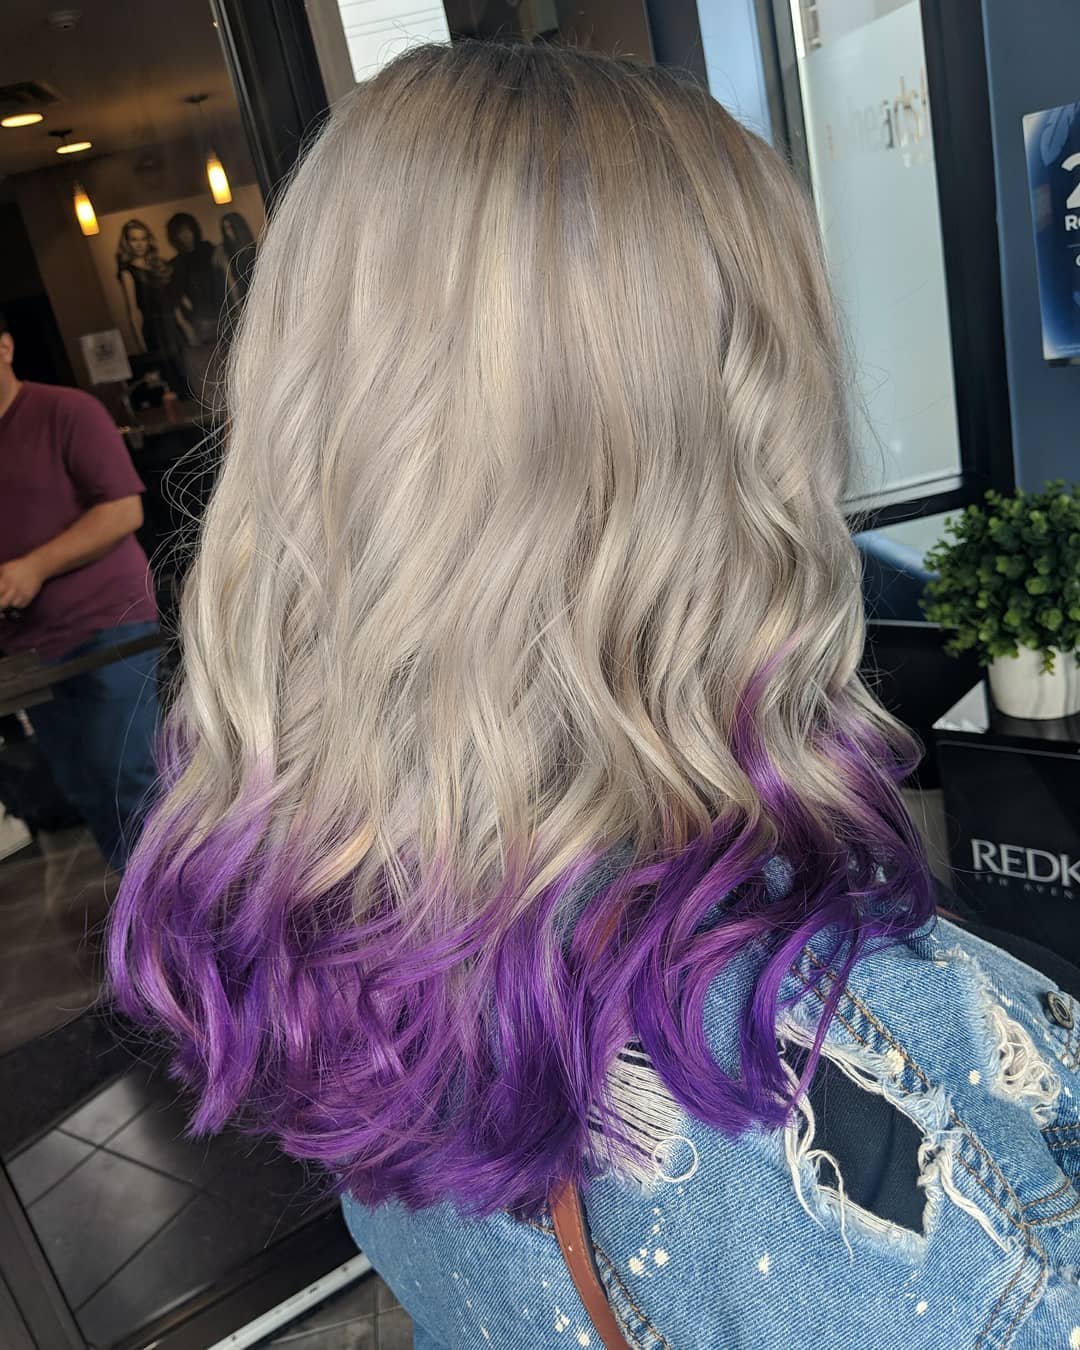 Medium/Long Purple Ombre Hair